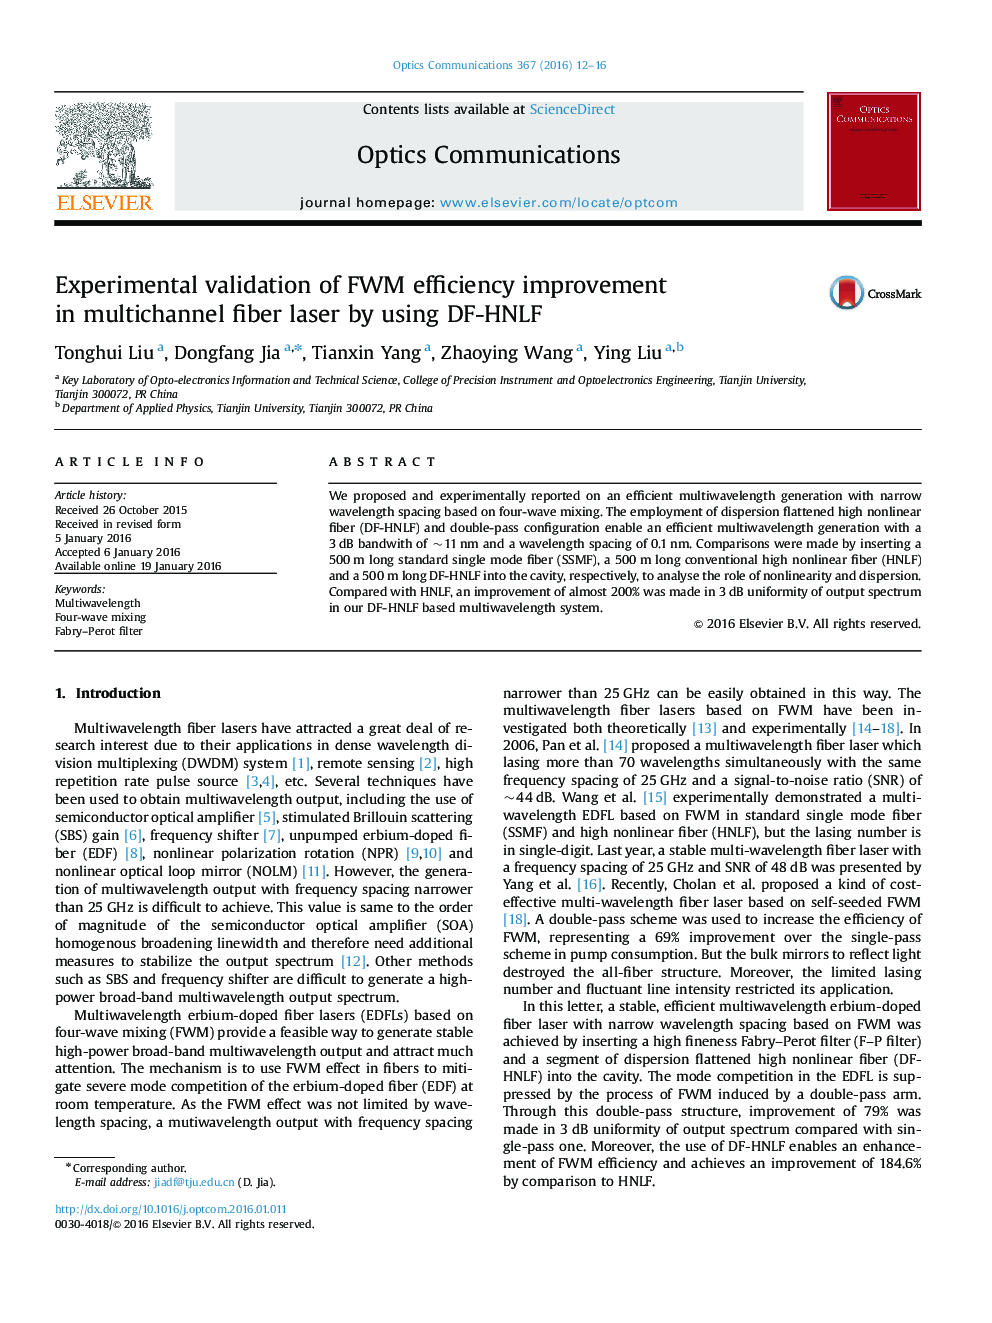 Experimental validation of FWM efficiency improvement in multichannel fiber laser by using DF-HNLF